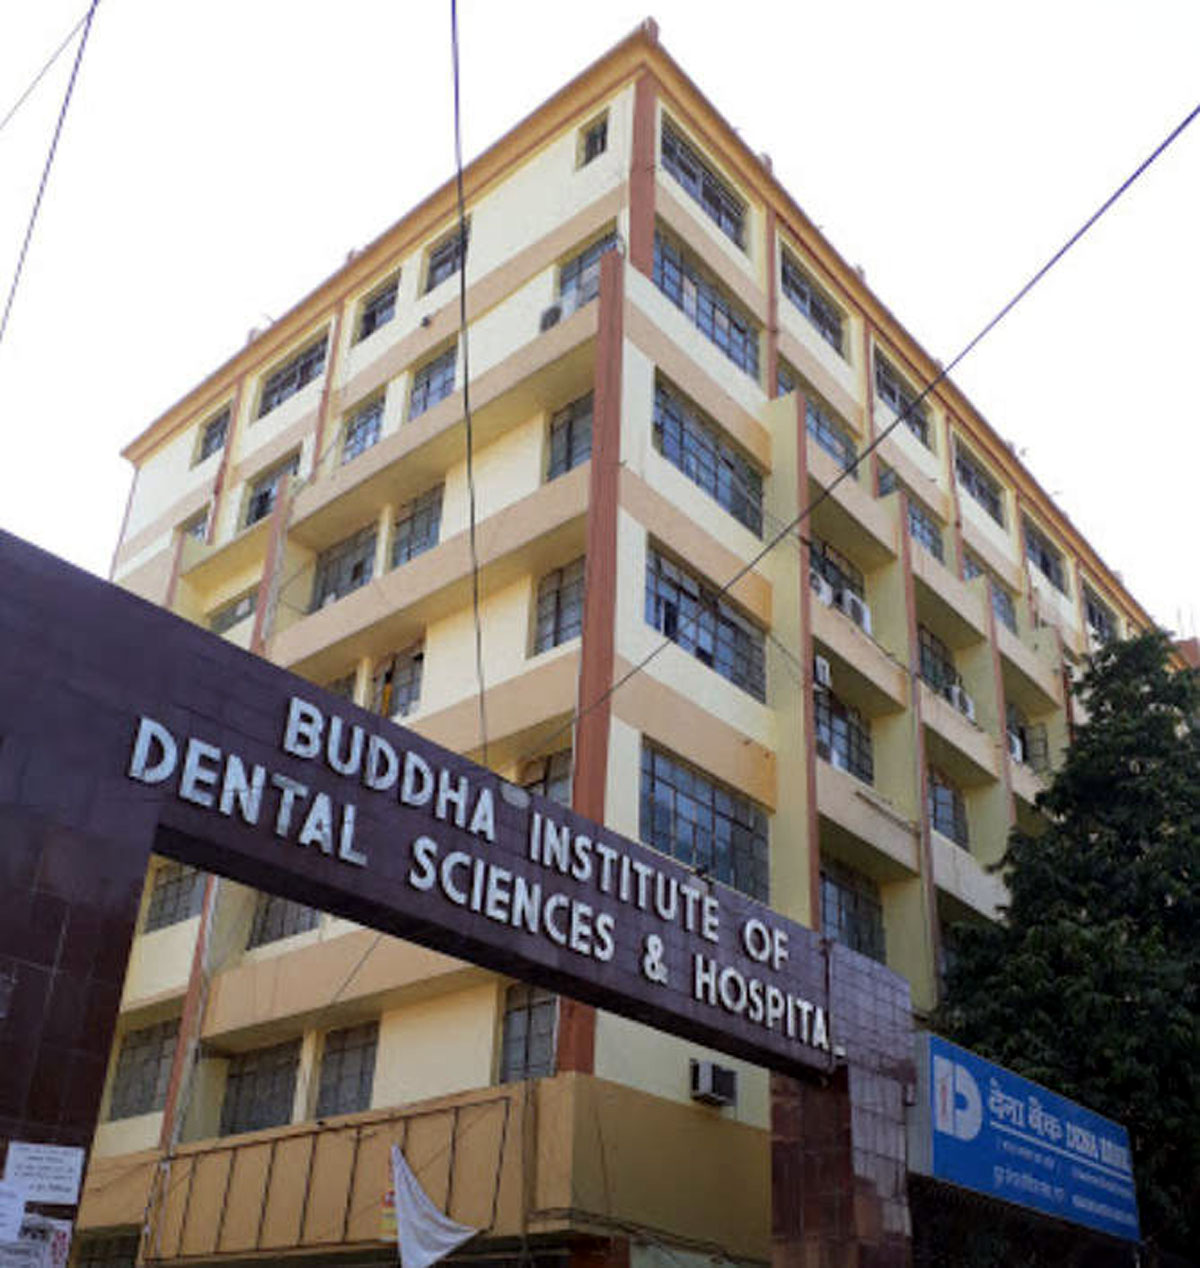 Buddha Institute of Dental Sciences & Hospital, Kankarbagh, Patna